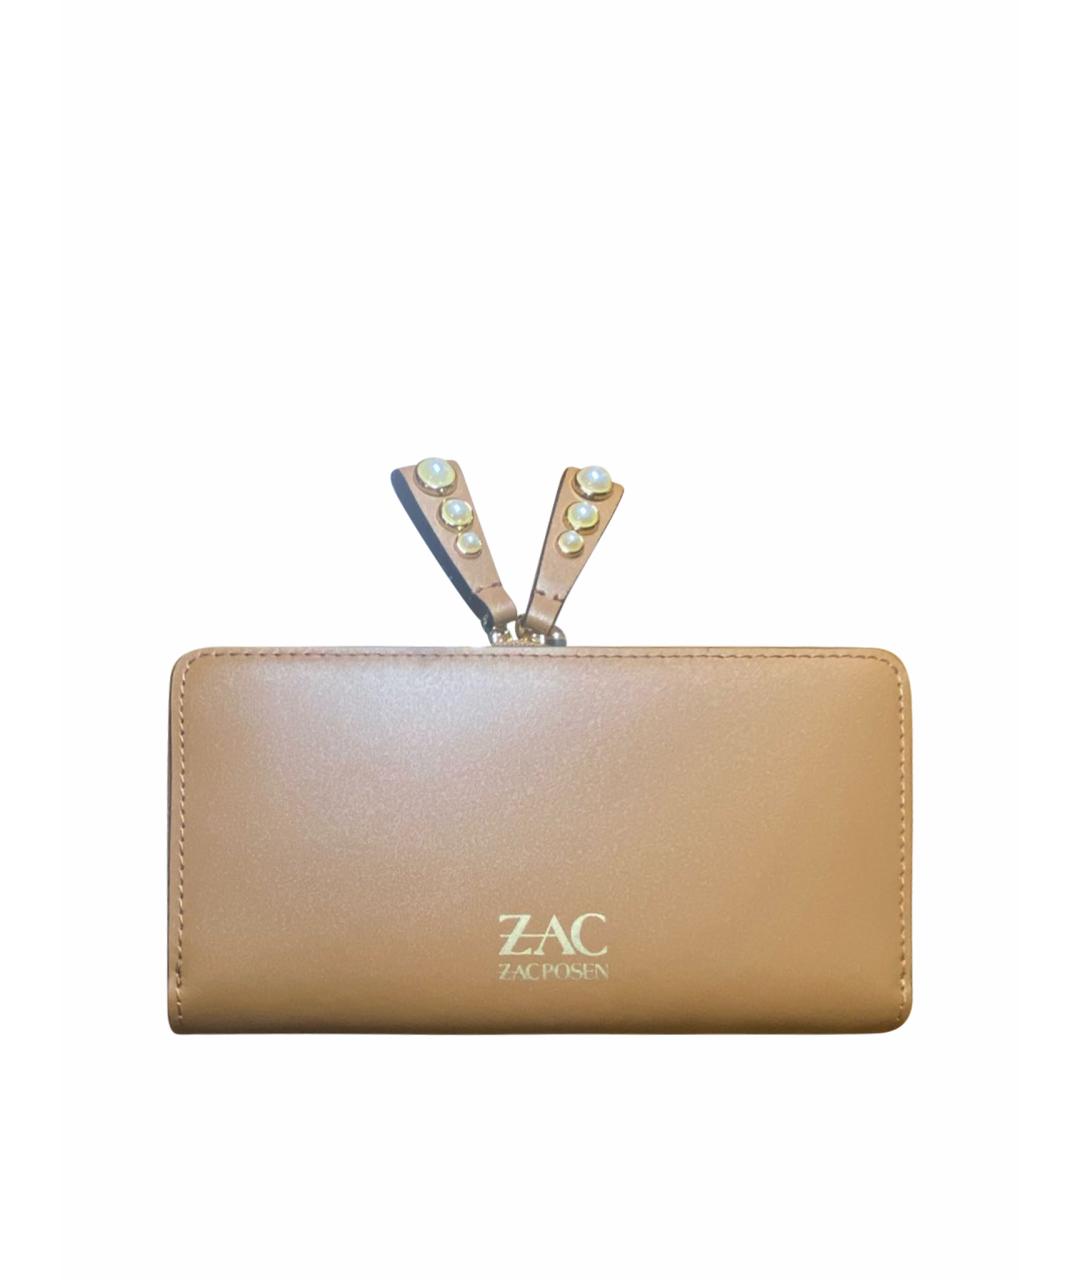 ZAC ZAC POSEN Горчичный кожаный кошелек, фото 1